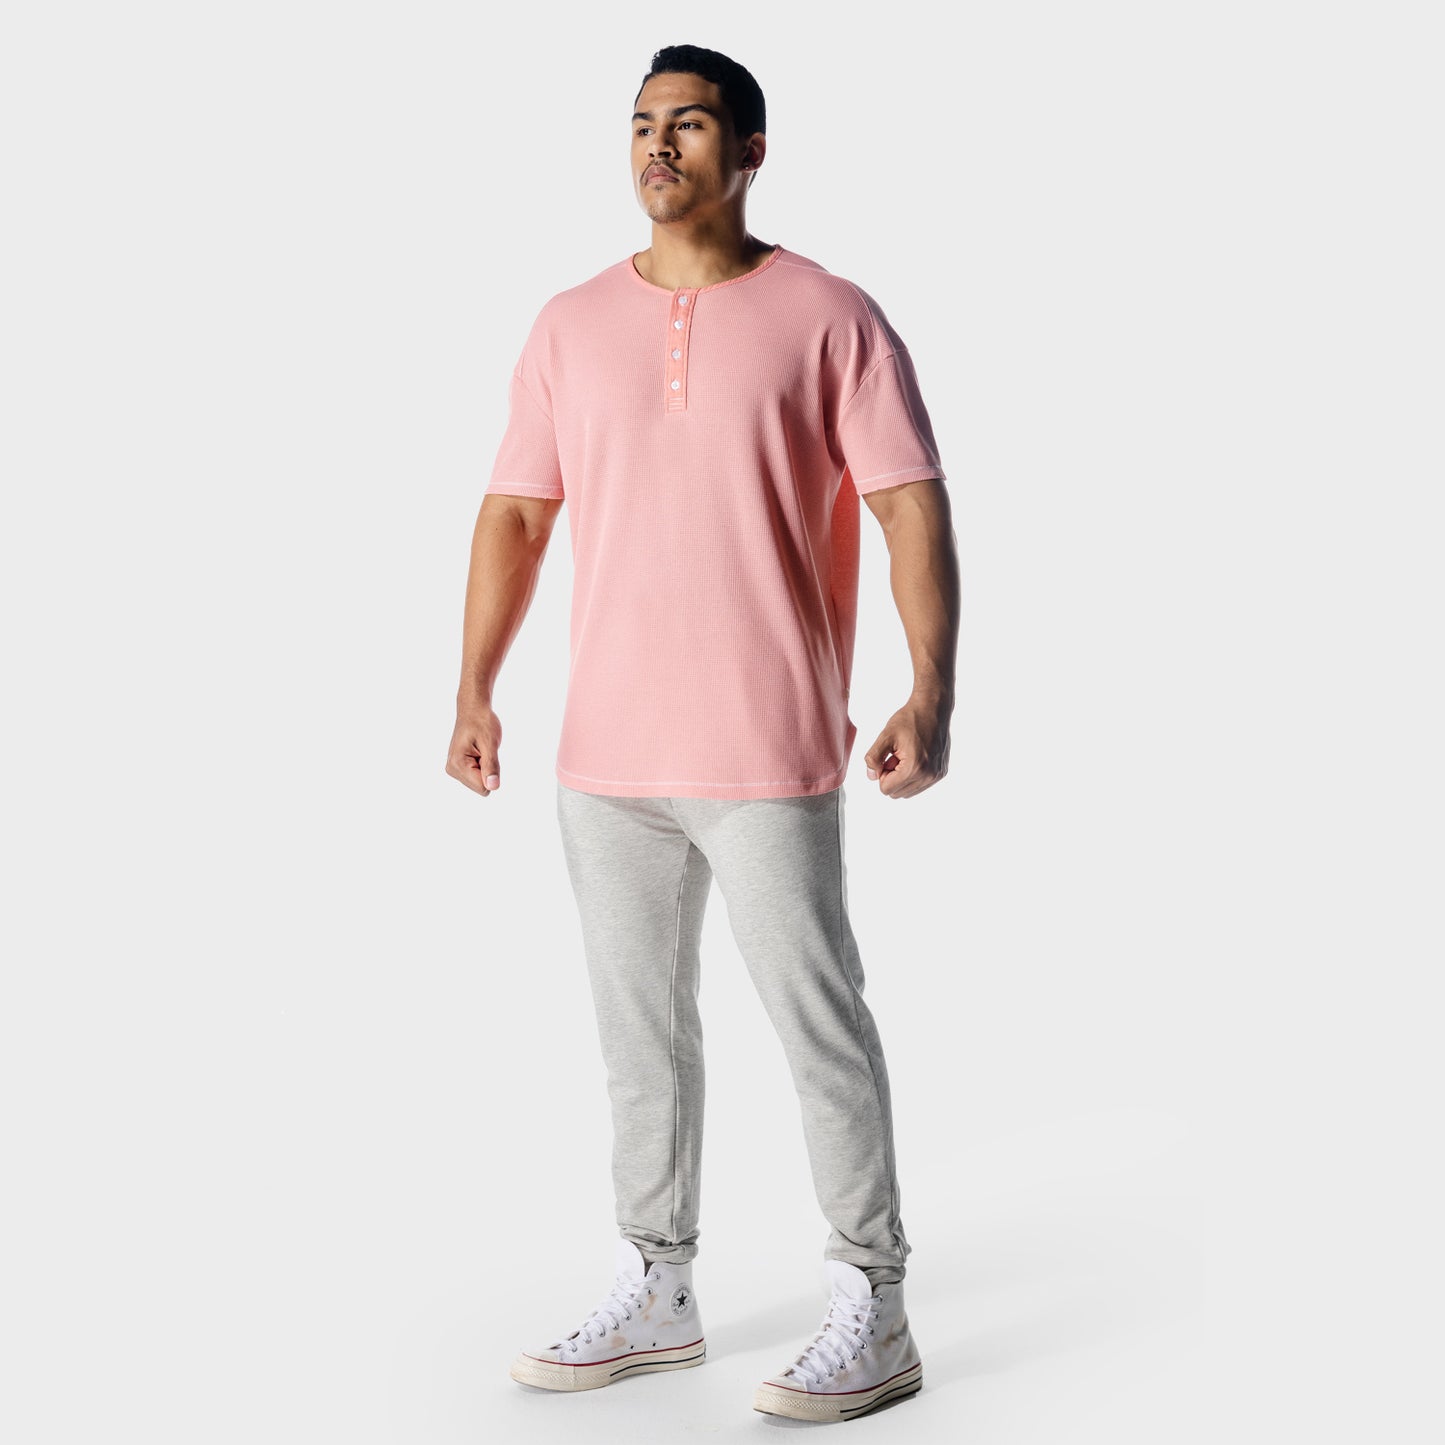 squatwolf-workout-shirts-golden-era-waffle-top-flamingo-pink-gym-wear-for-men